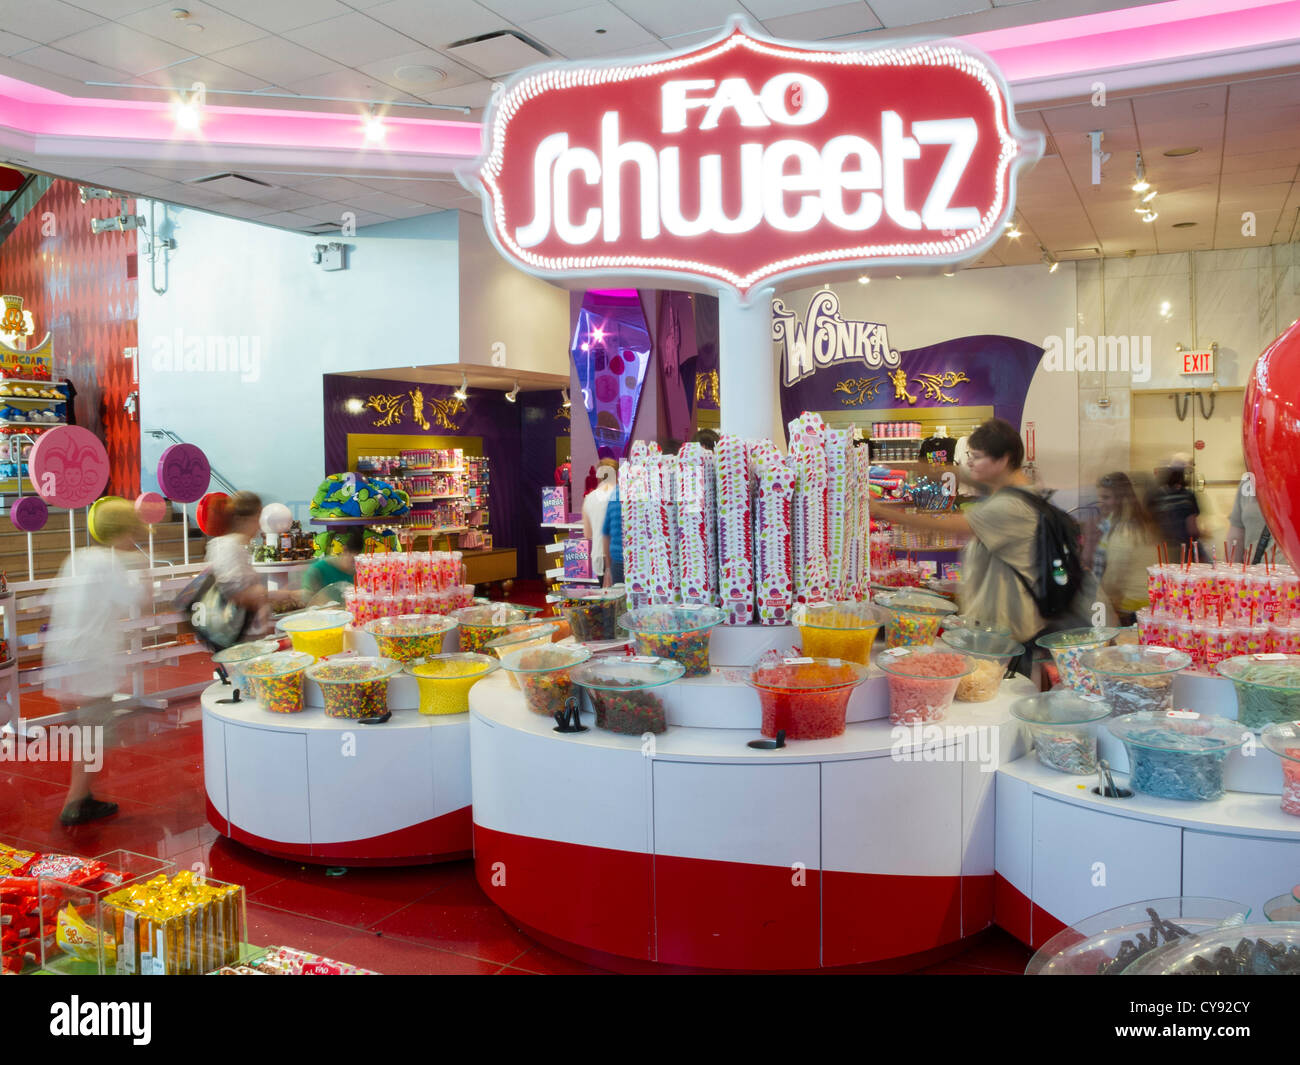 FAO Schwarz Flagship Toy Store Interior, NYC Stock Photo